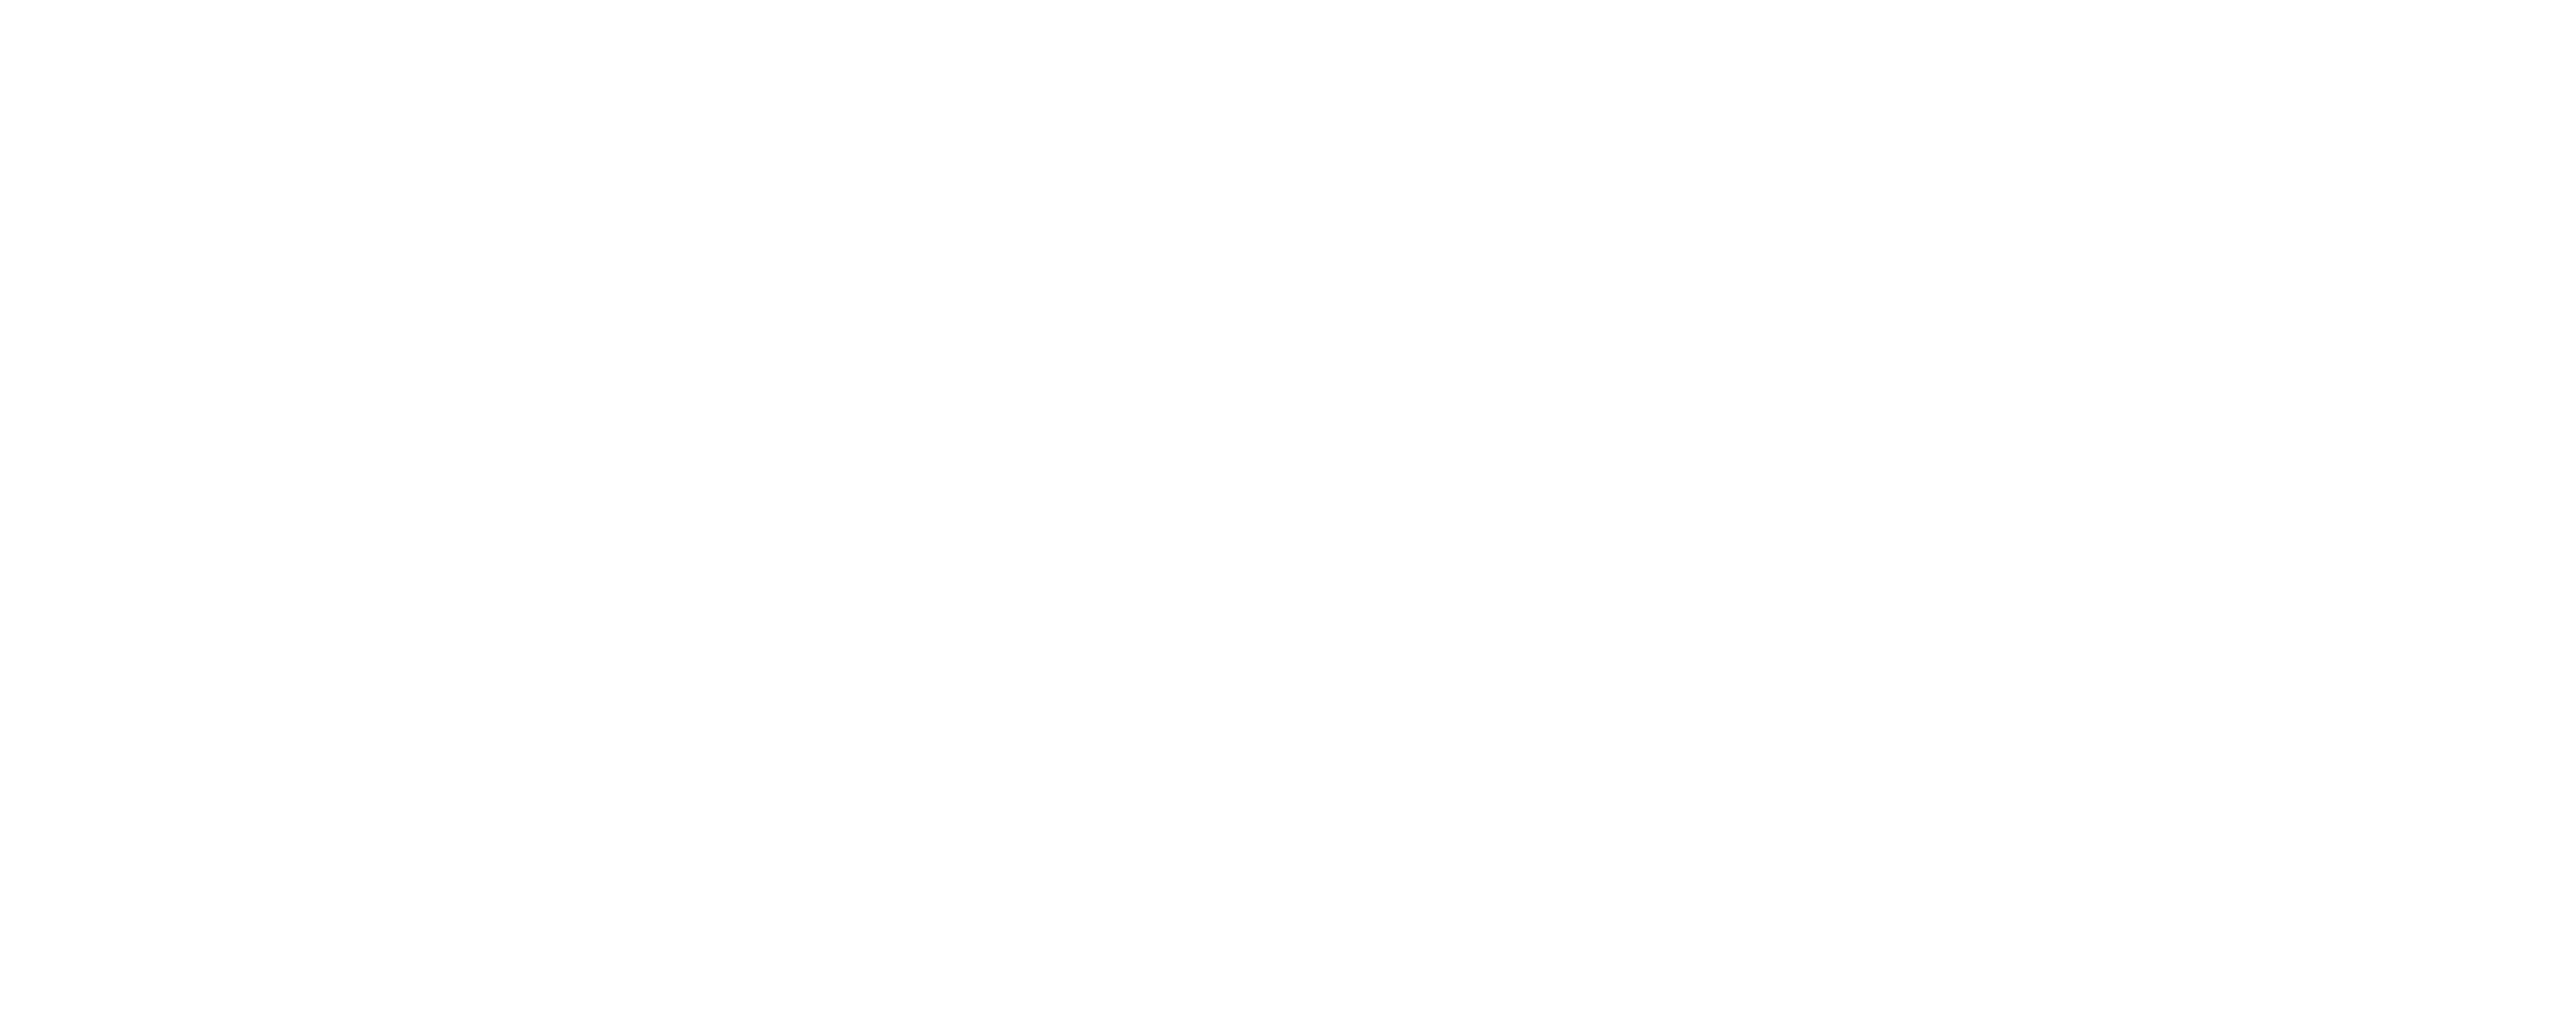 OnRobot logo